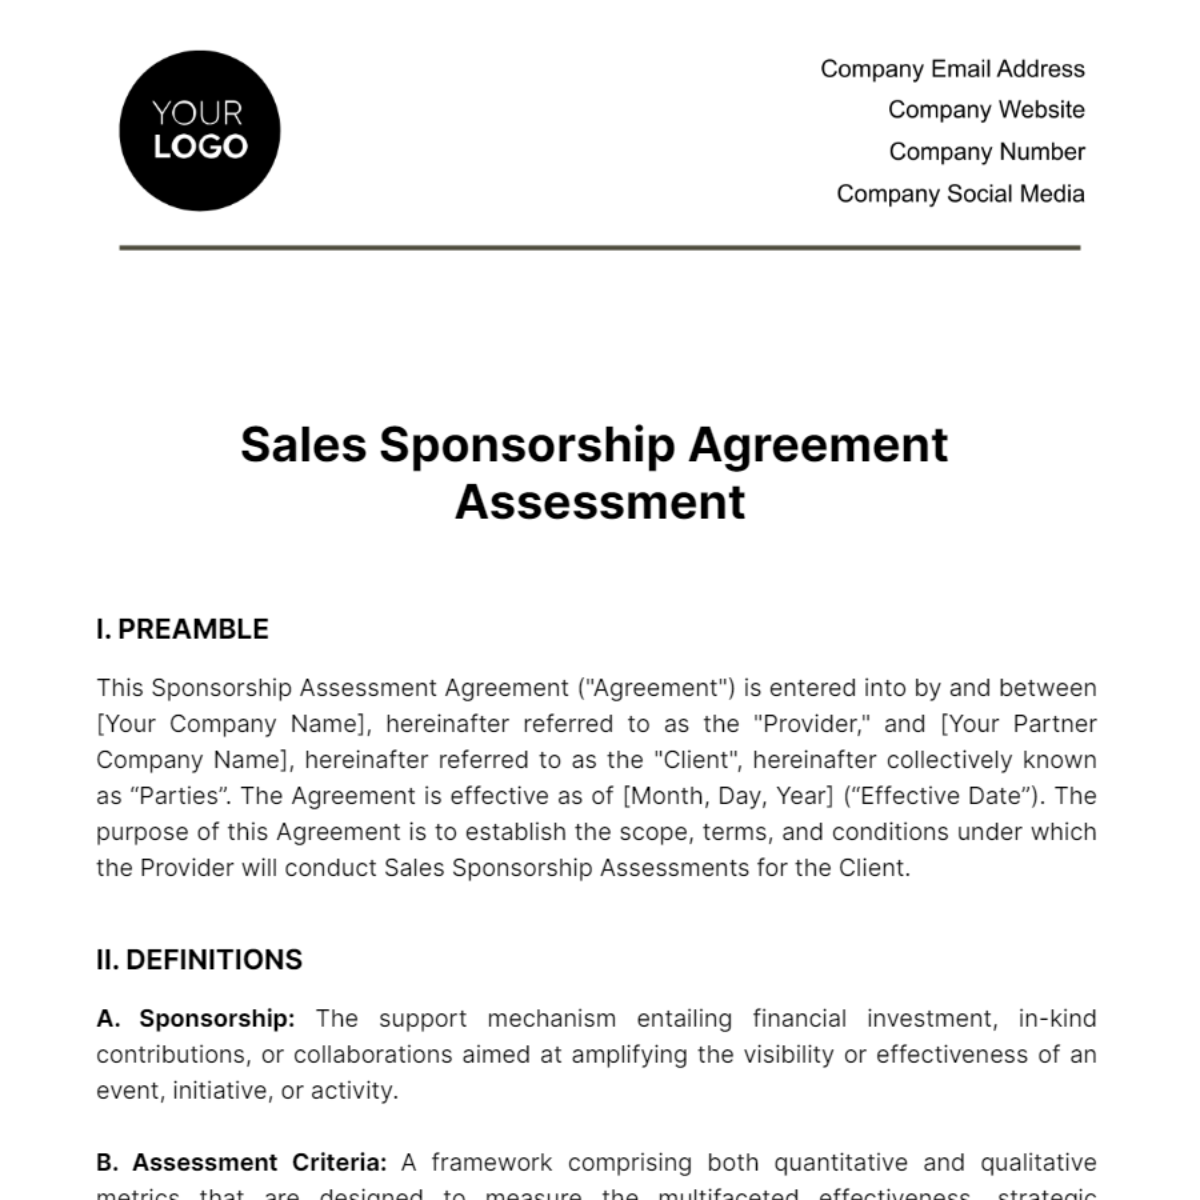 Free Sales Sponsorship Agreement Assessment Template